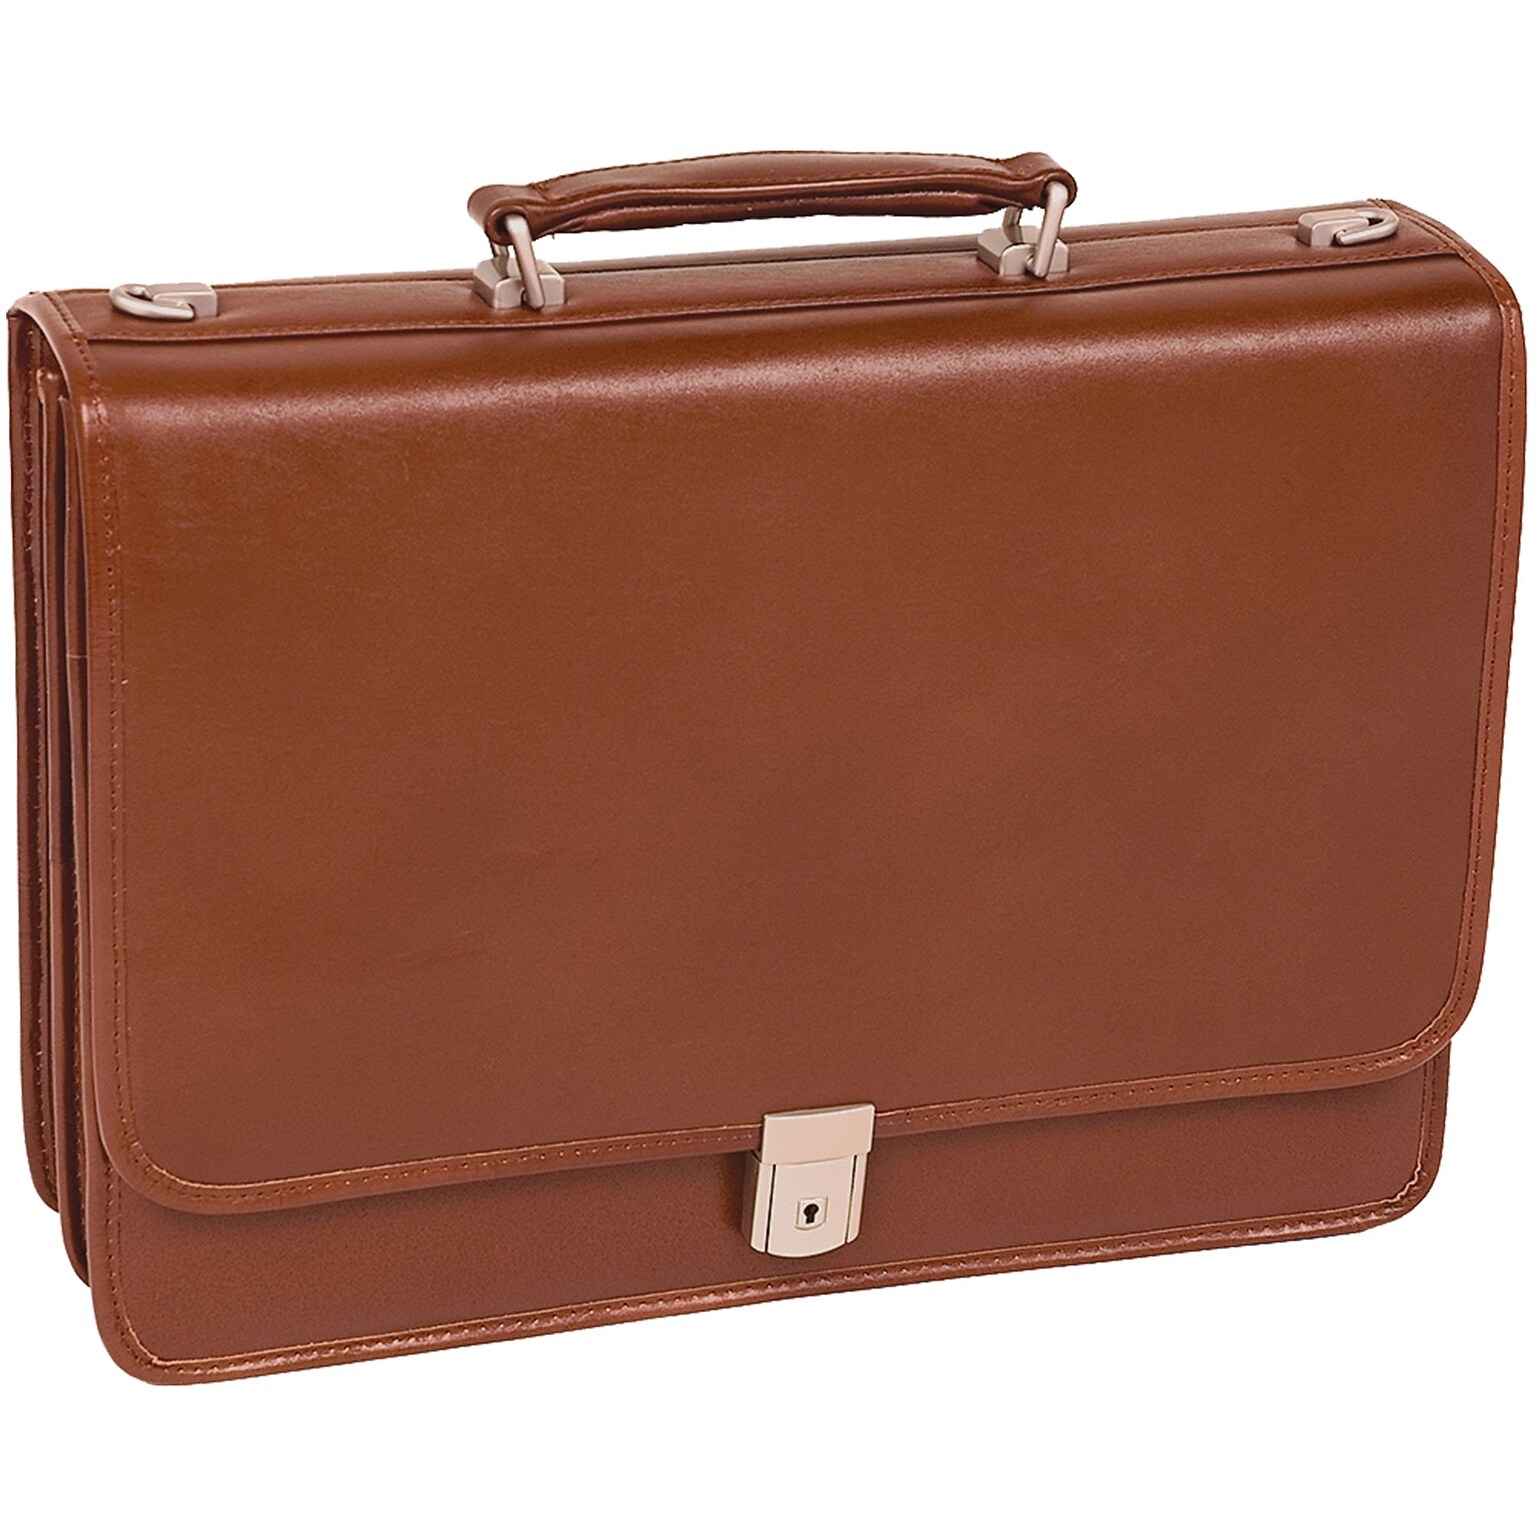 McKlein V Series, LEXINGTON, Top Grain Cowhide Leather,Flapover Double Compartment Briefcase, Brown (83544)